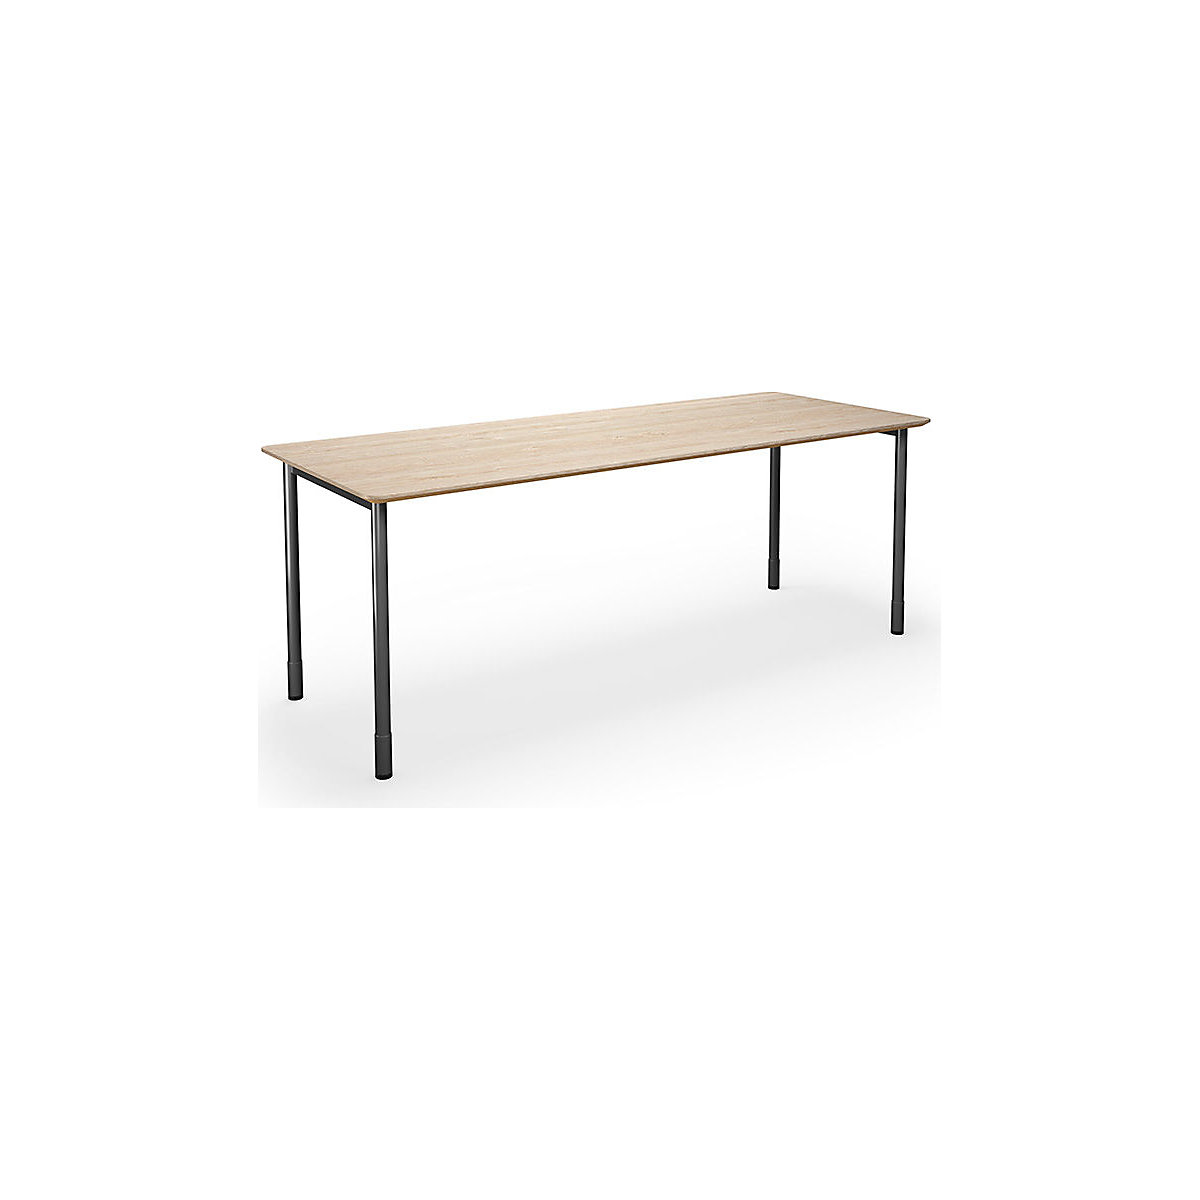 DUO-C Trend multi-purpose desk, straight tabletop, rounded corners, WxD 1800 x 800 mm, oak, black-4